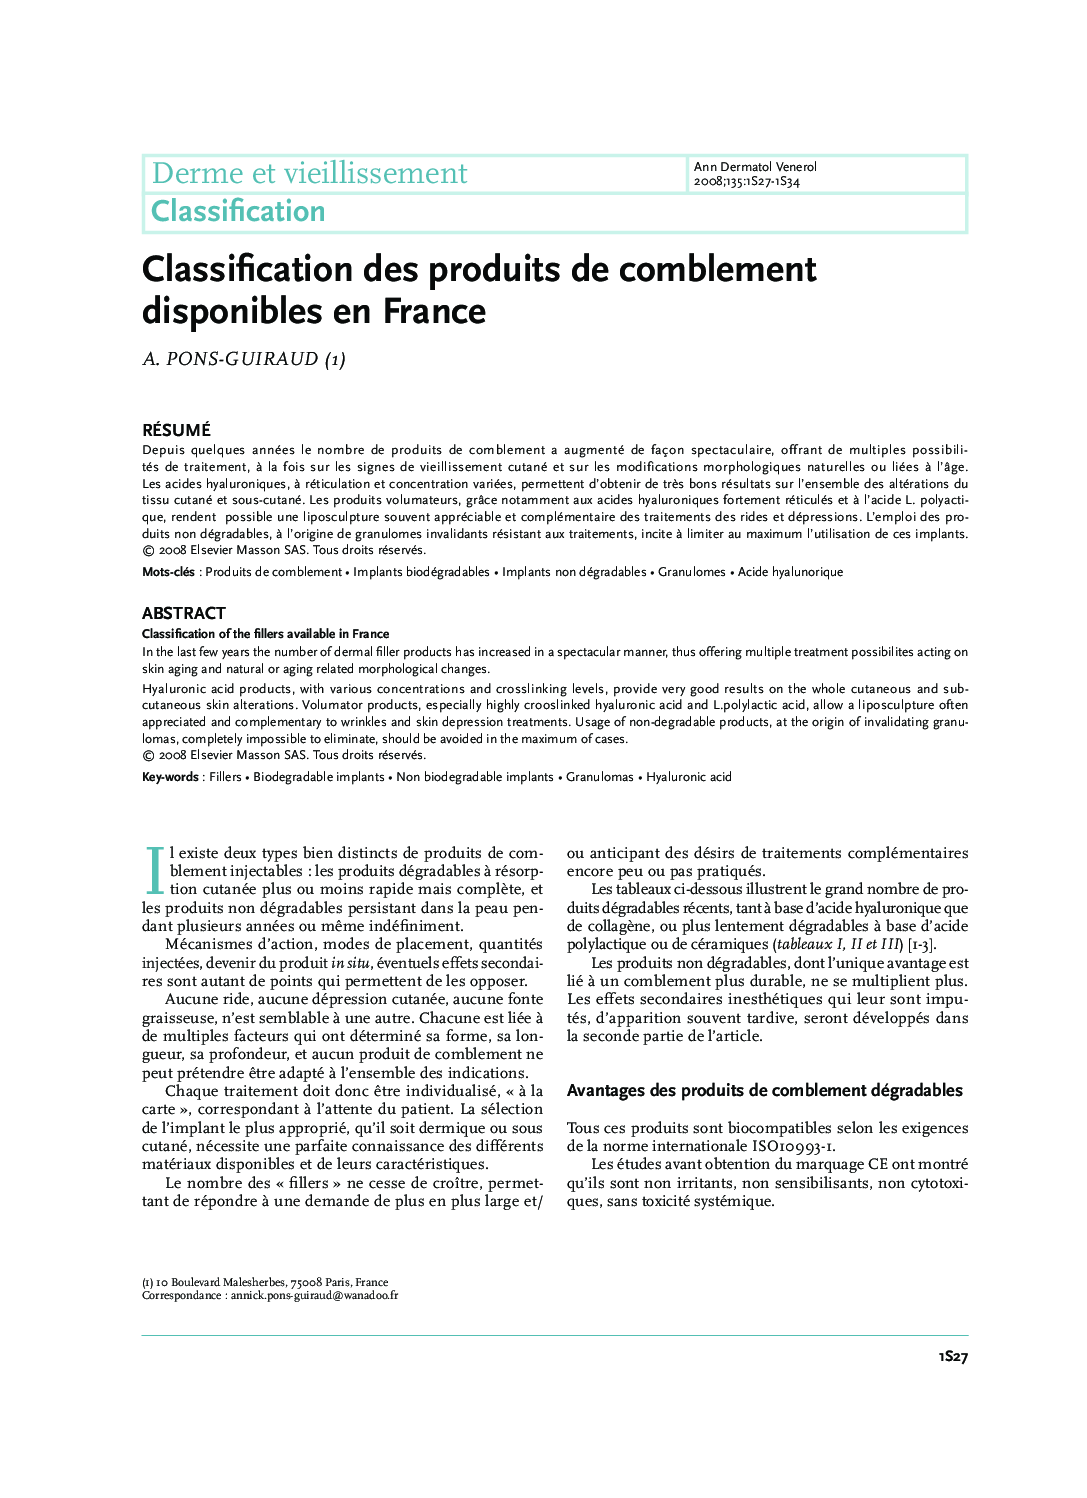 Classification des produits de comblement disponibles en France